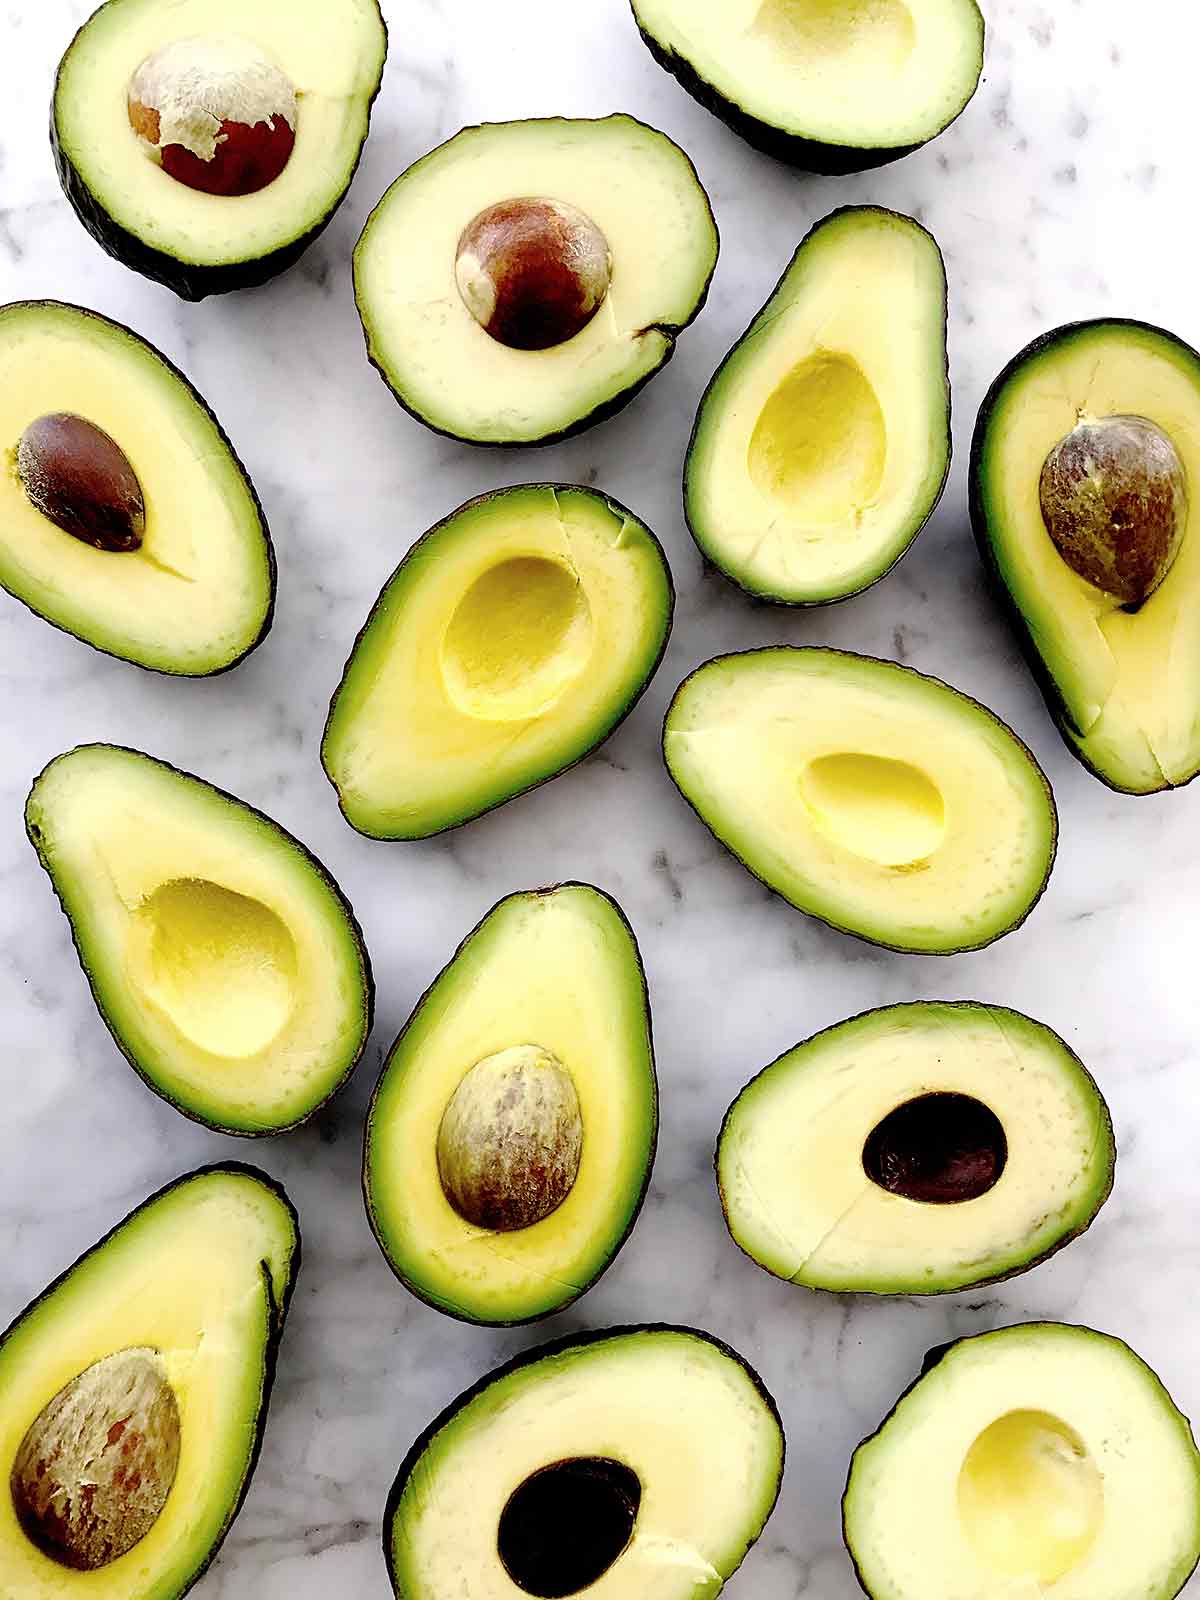 https://www.foodiecrush.com/craving-chunky-citrus-guacamole/how-to-choose-a-ripe-avocado/